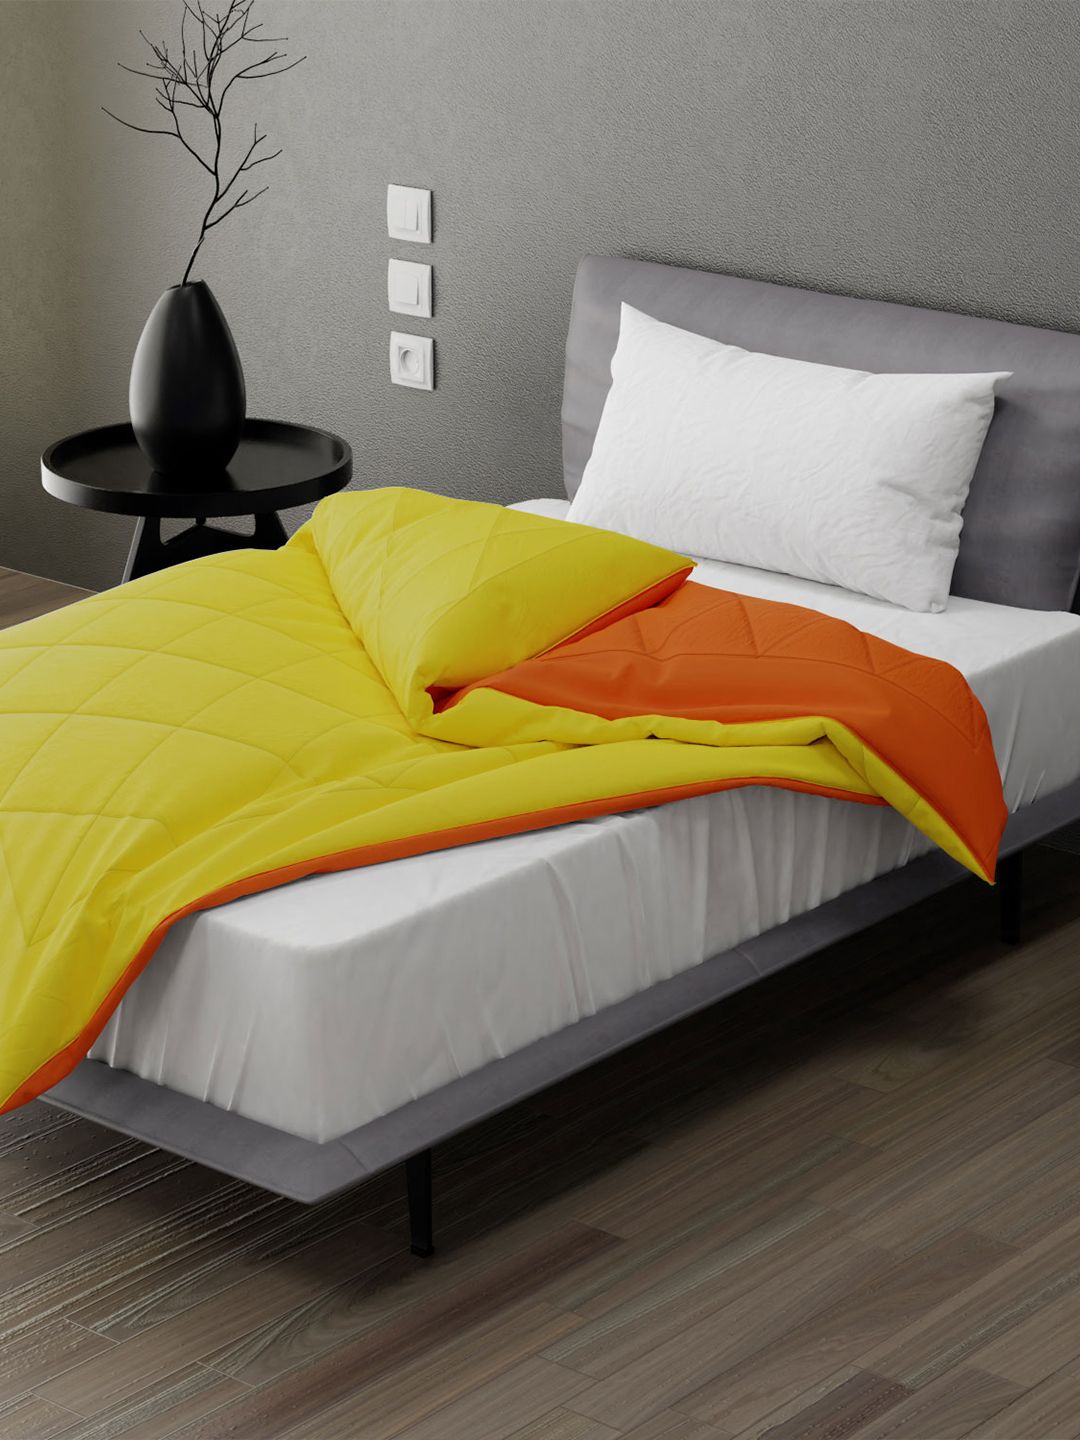 Stoa Paris Orange & Yellow Microfiber AC Room Reversible Single Bed Comforter Price in India